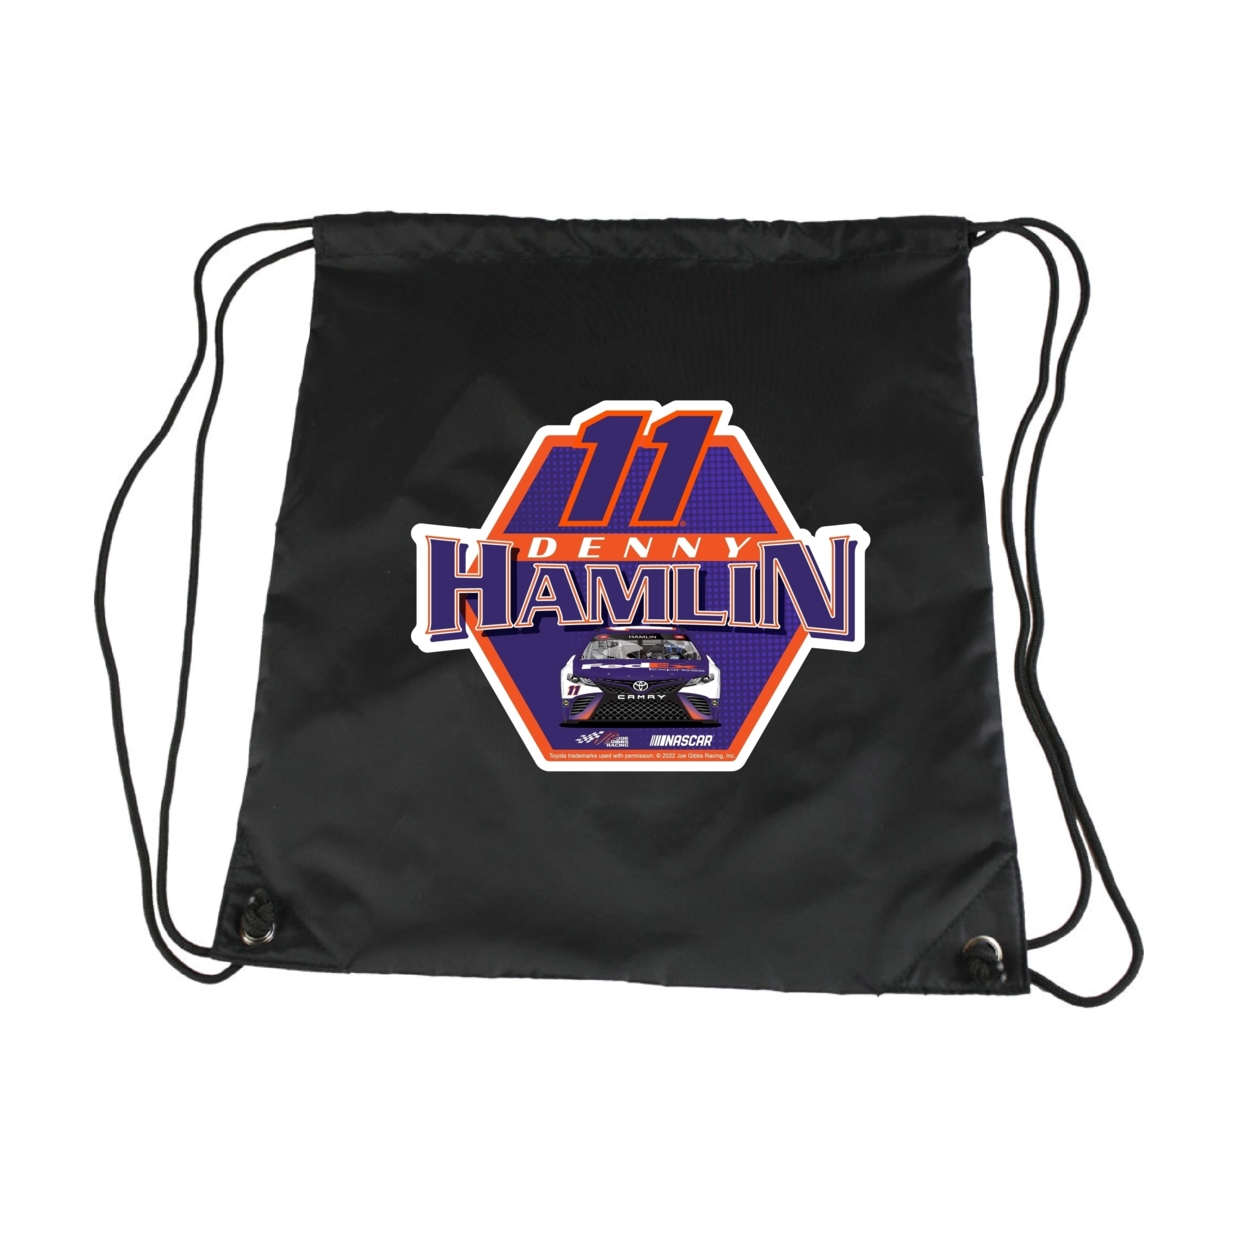 #11 Denny Hamlin Officially Licensed Nascar Cinch Bag With Drawstring